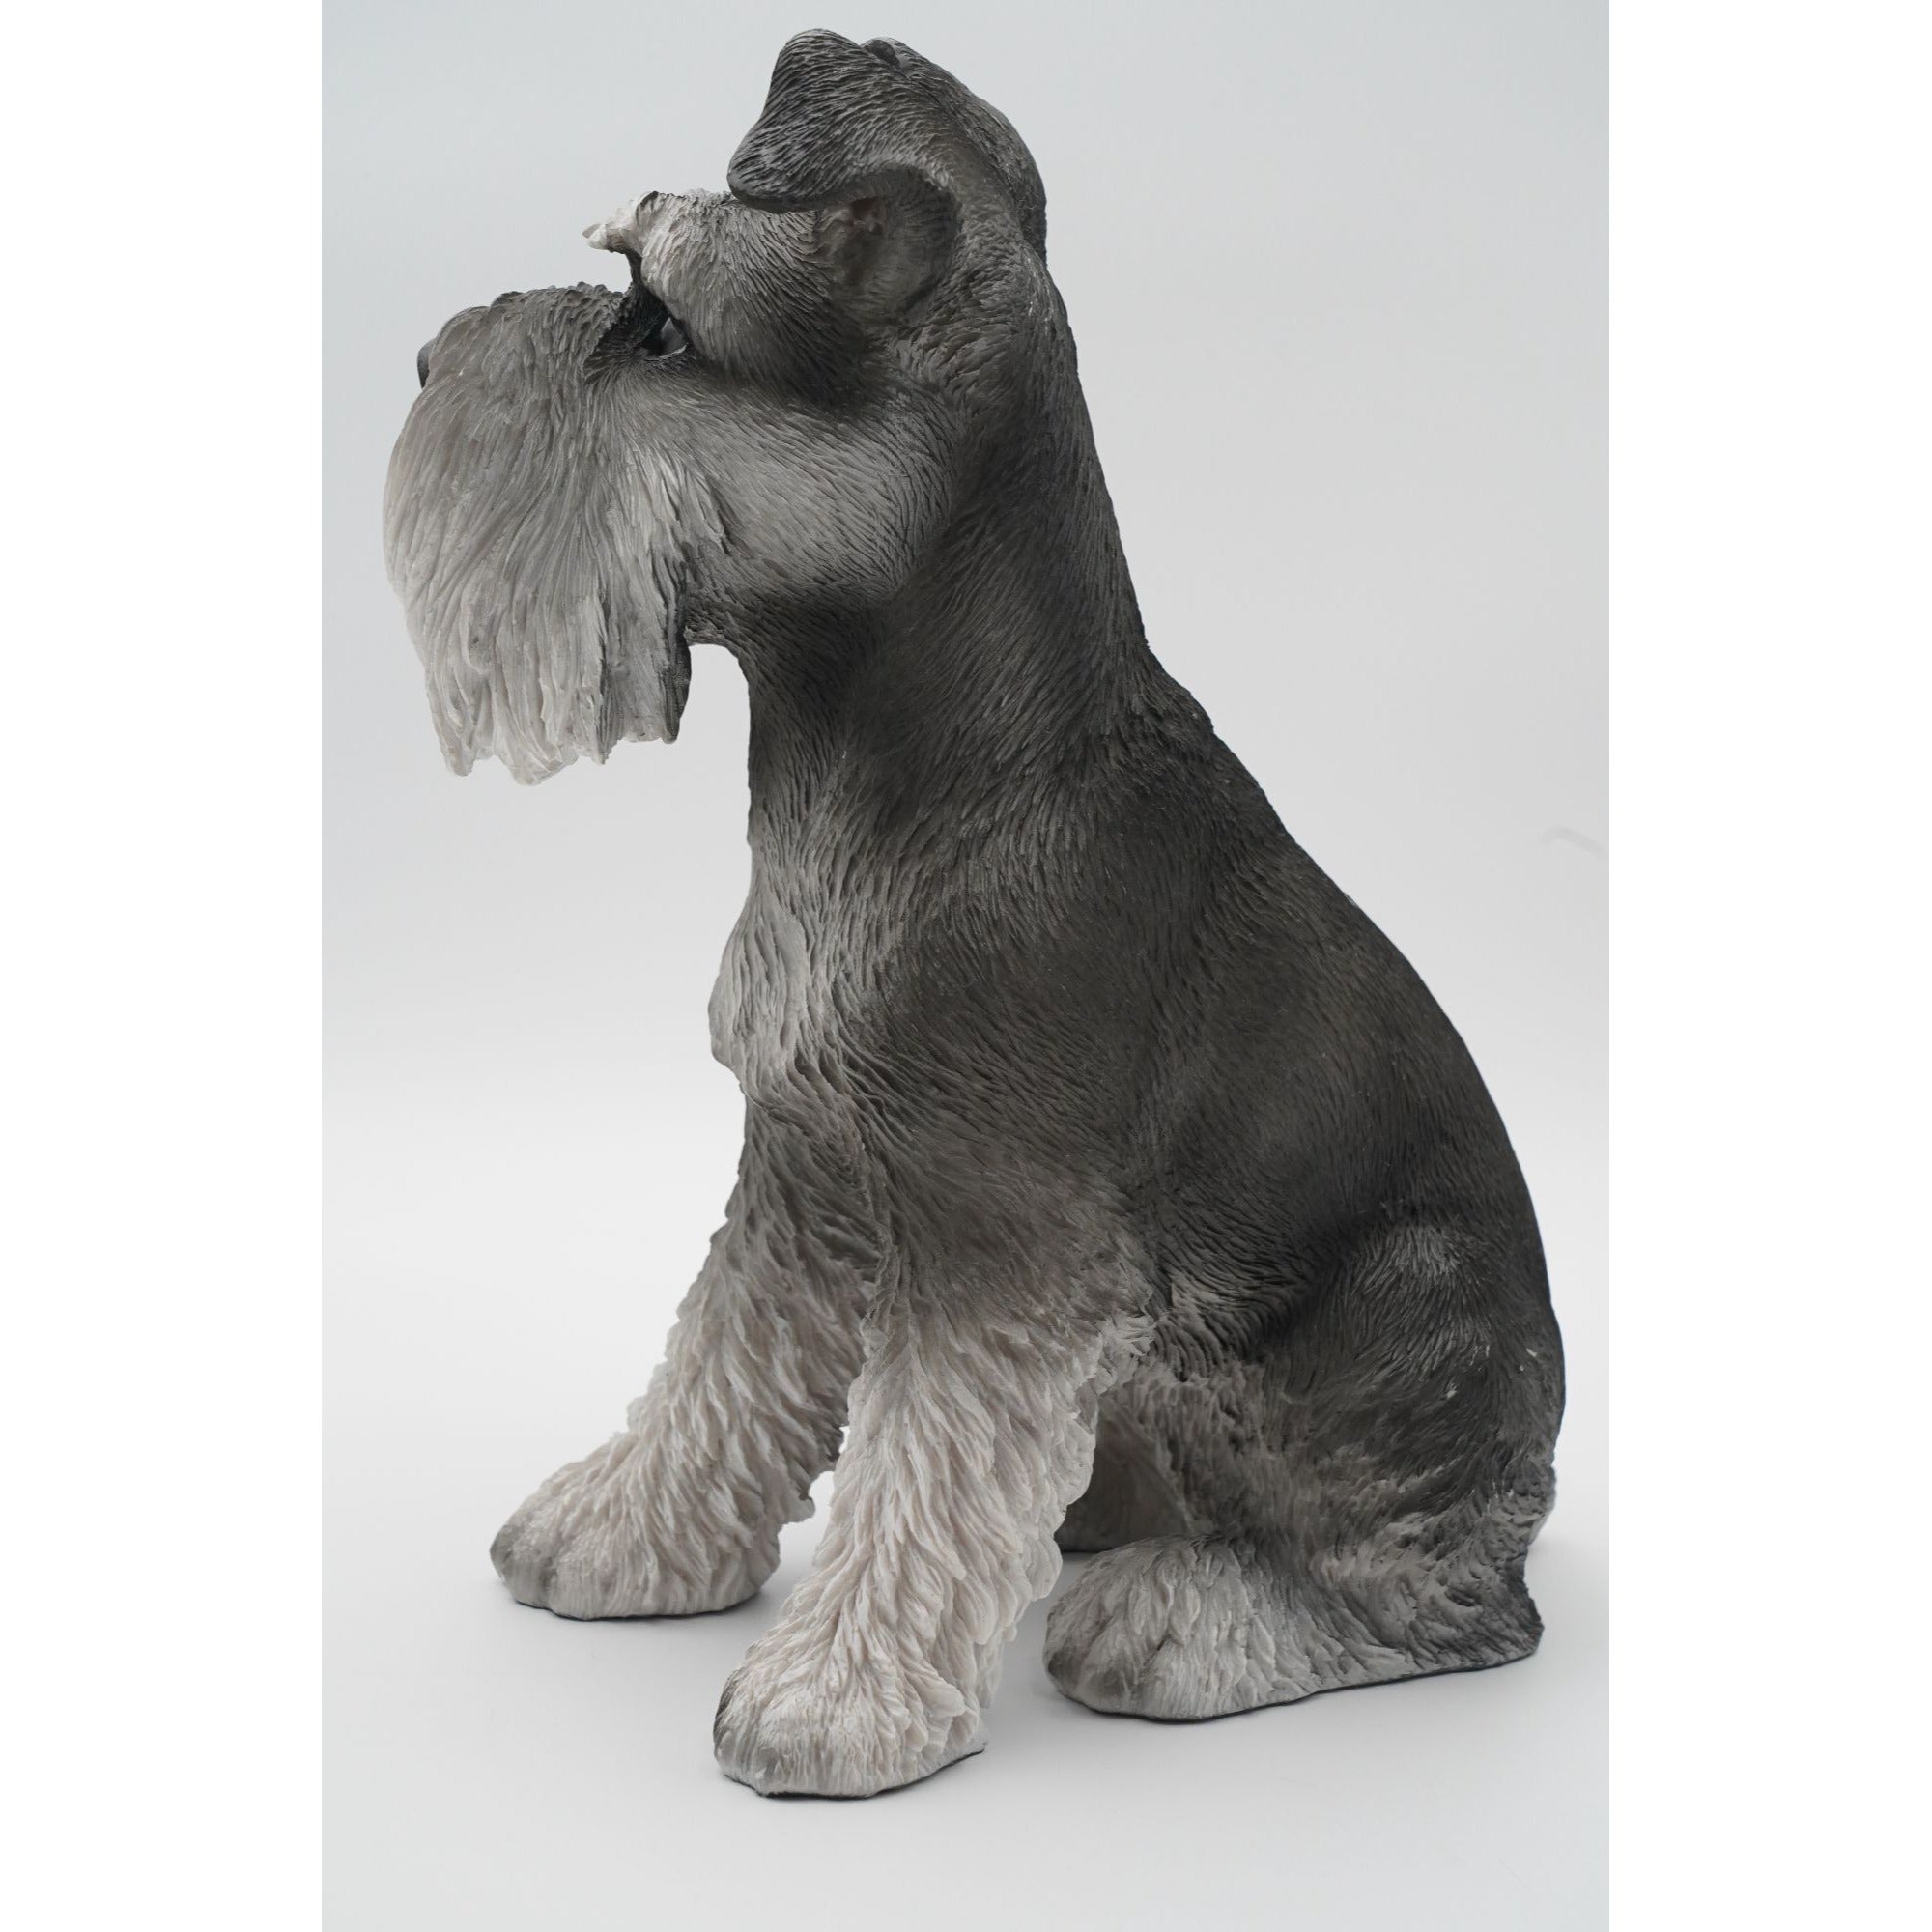 Large Sitting Realistic Schnauzer Puppy Dog Figurine Resin 12.5"